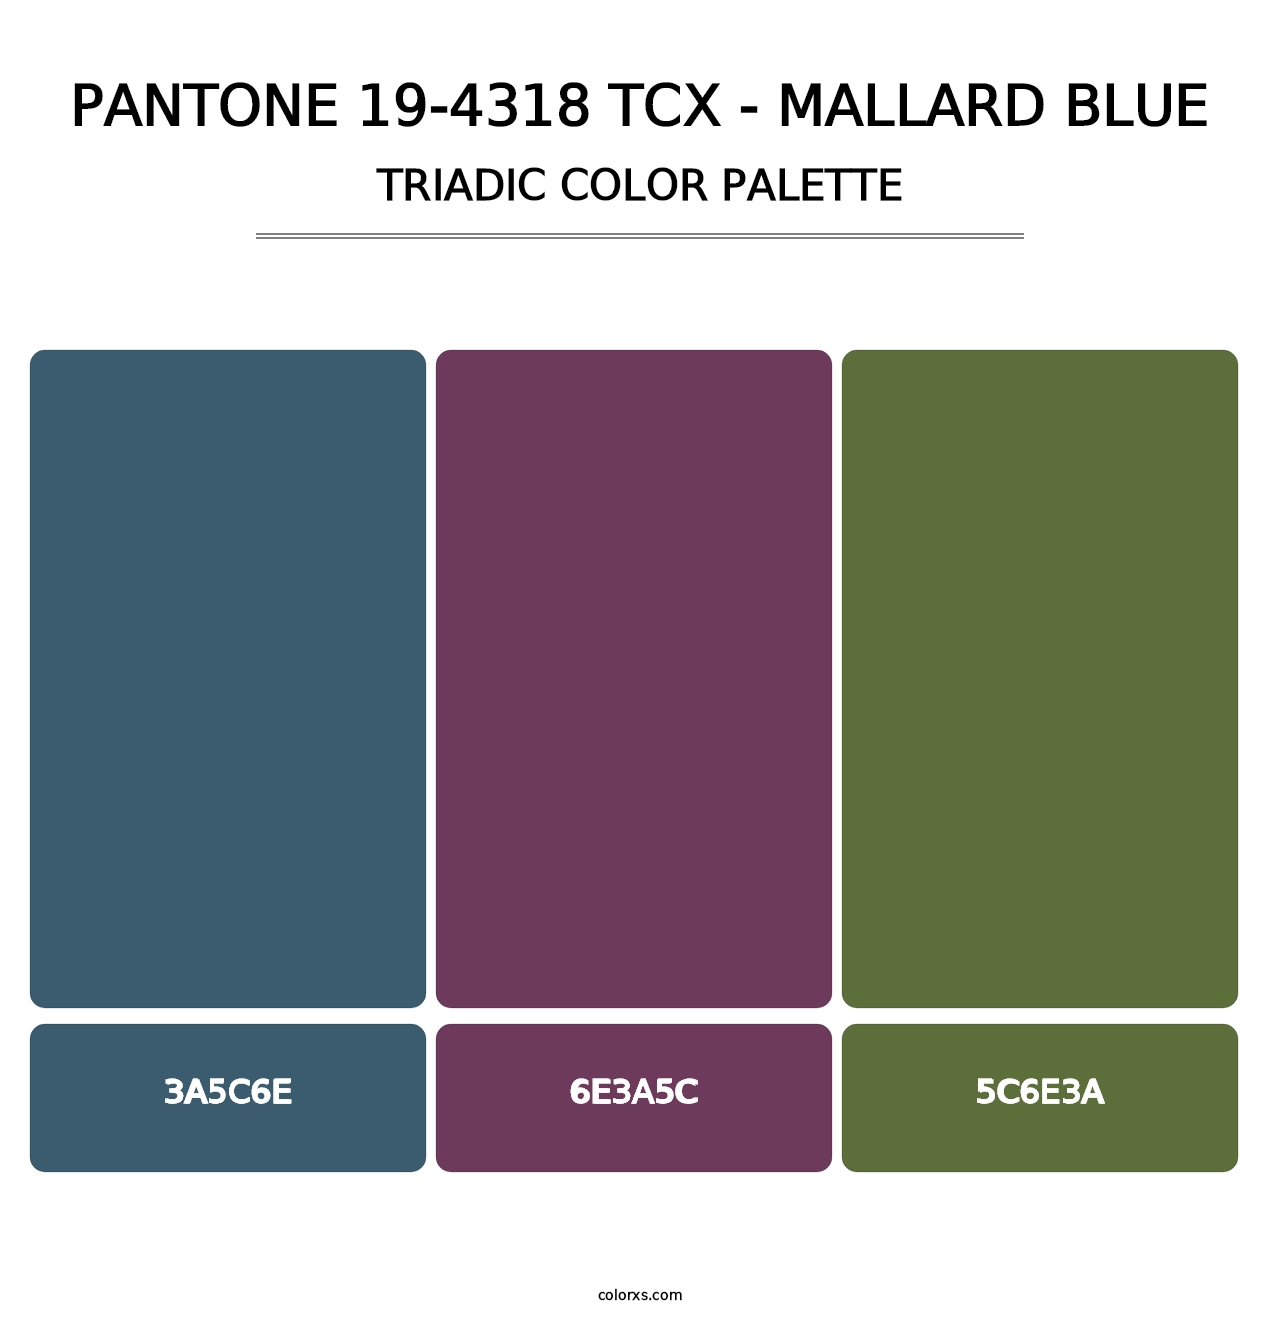 PANTONE 19-4318 TCX - Mallard Blue - Triadic Color Palette